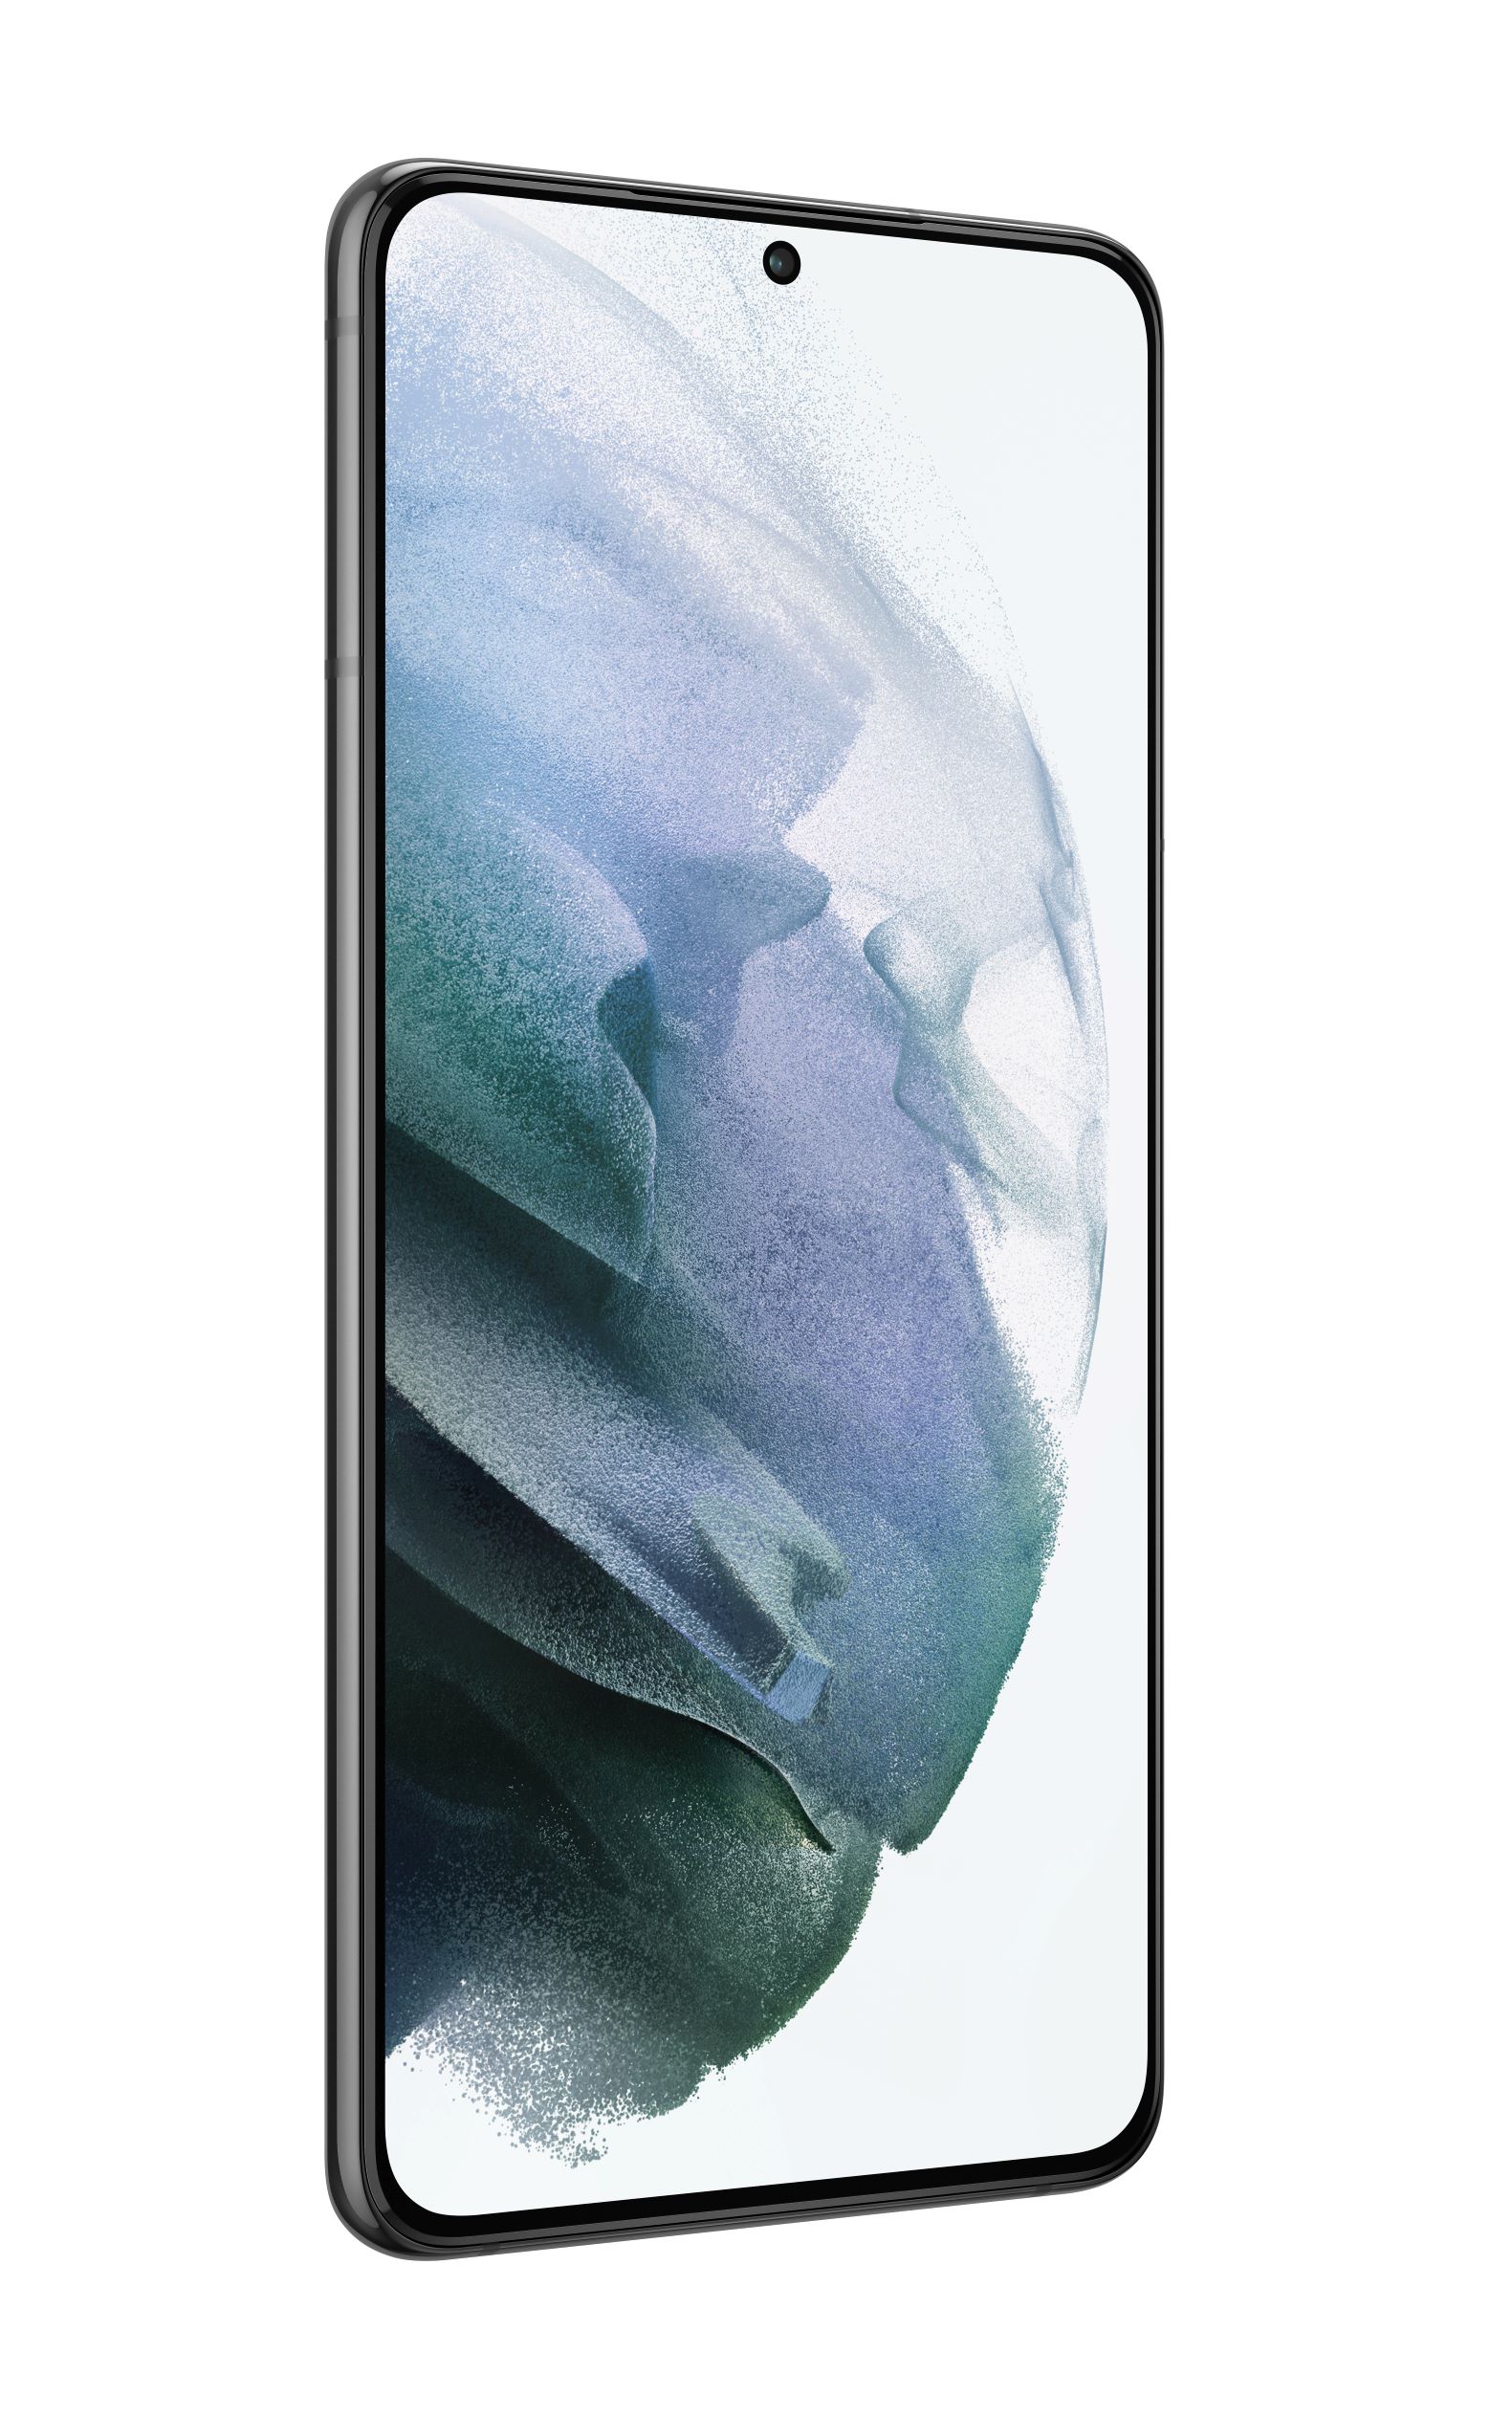 AT&T Samsung Galaxy S21+ 5G Black 128GB - image 1 of 2